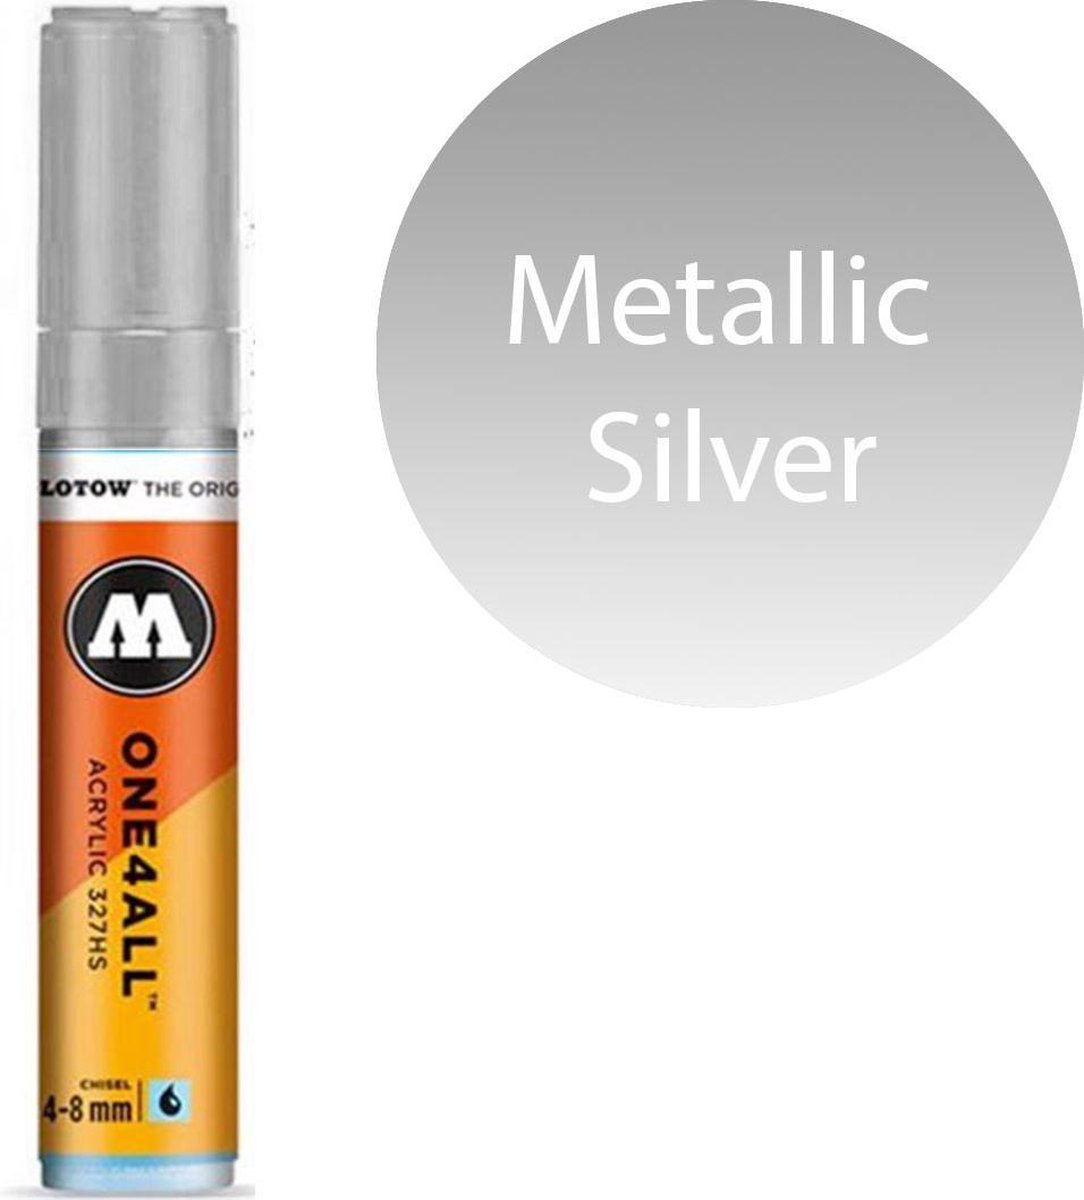 Molotow 327HS Metallic Silver - zilveren acryl marker - Chisel tip 4-8mm - Kleur zilver